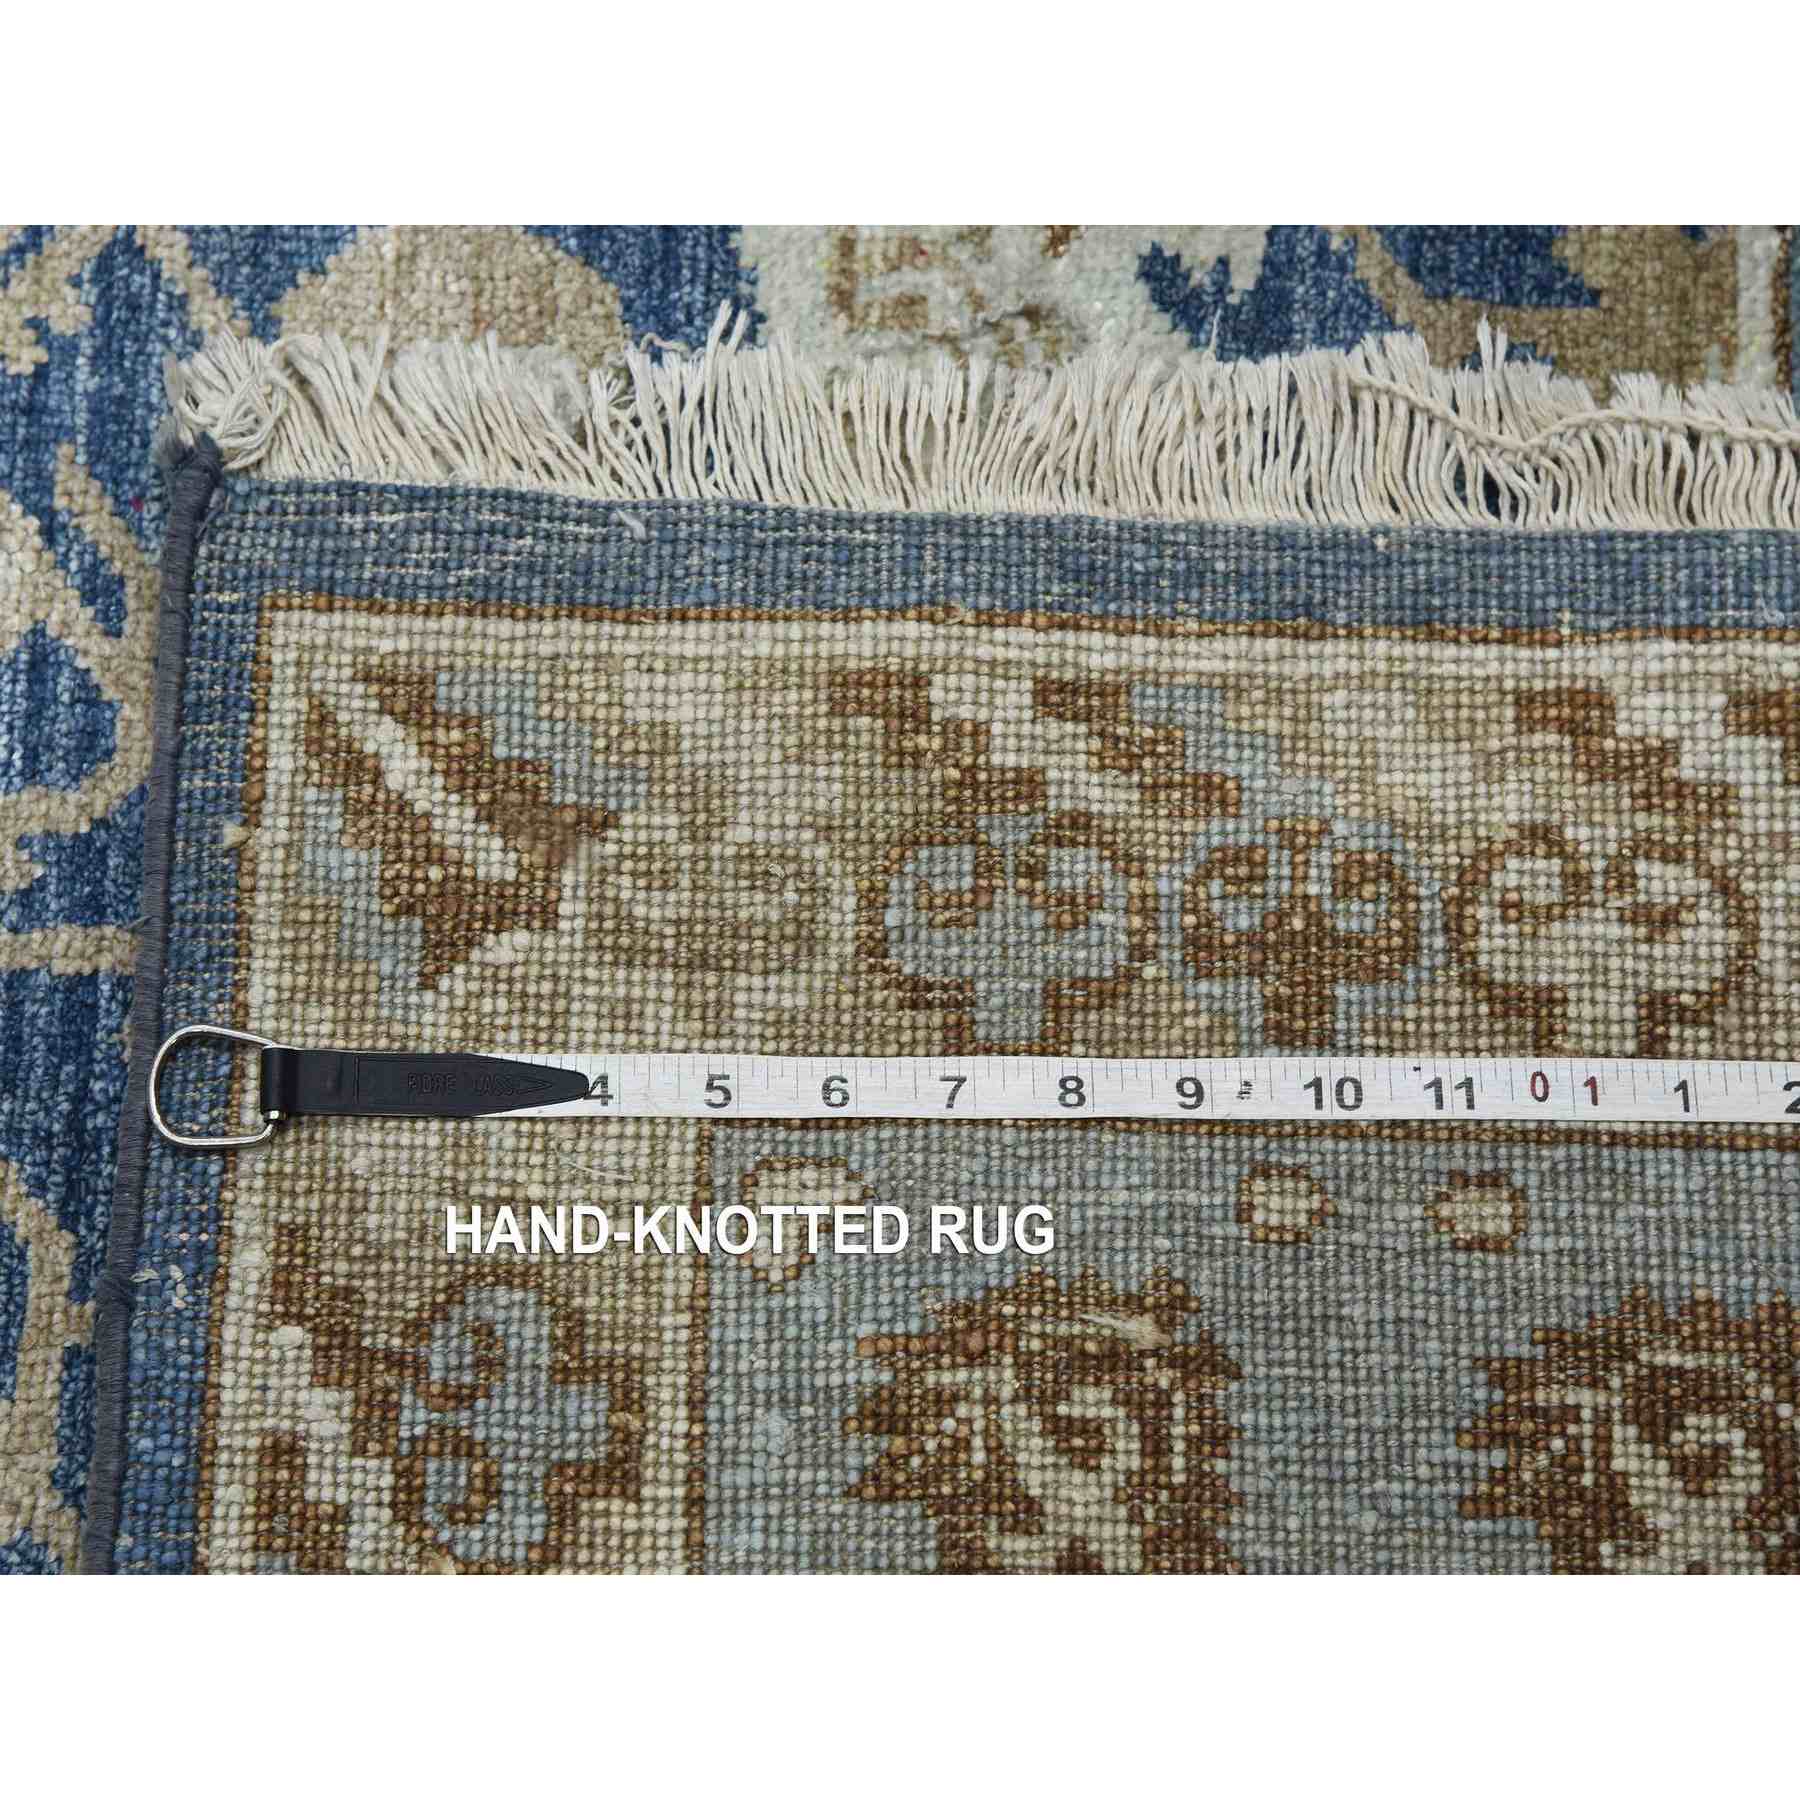 Khotan-and-Samarkand-Hand-Knotted-Rug-376210